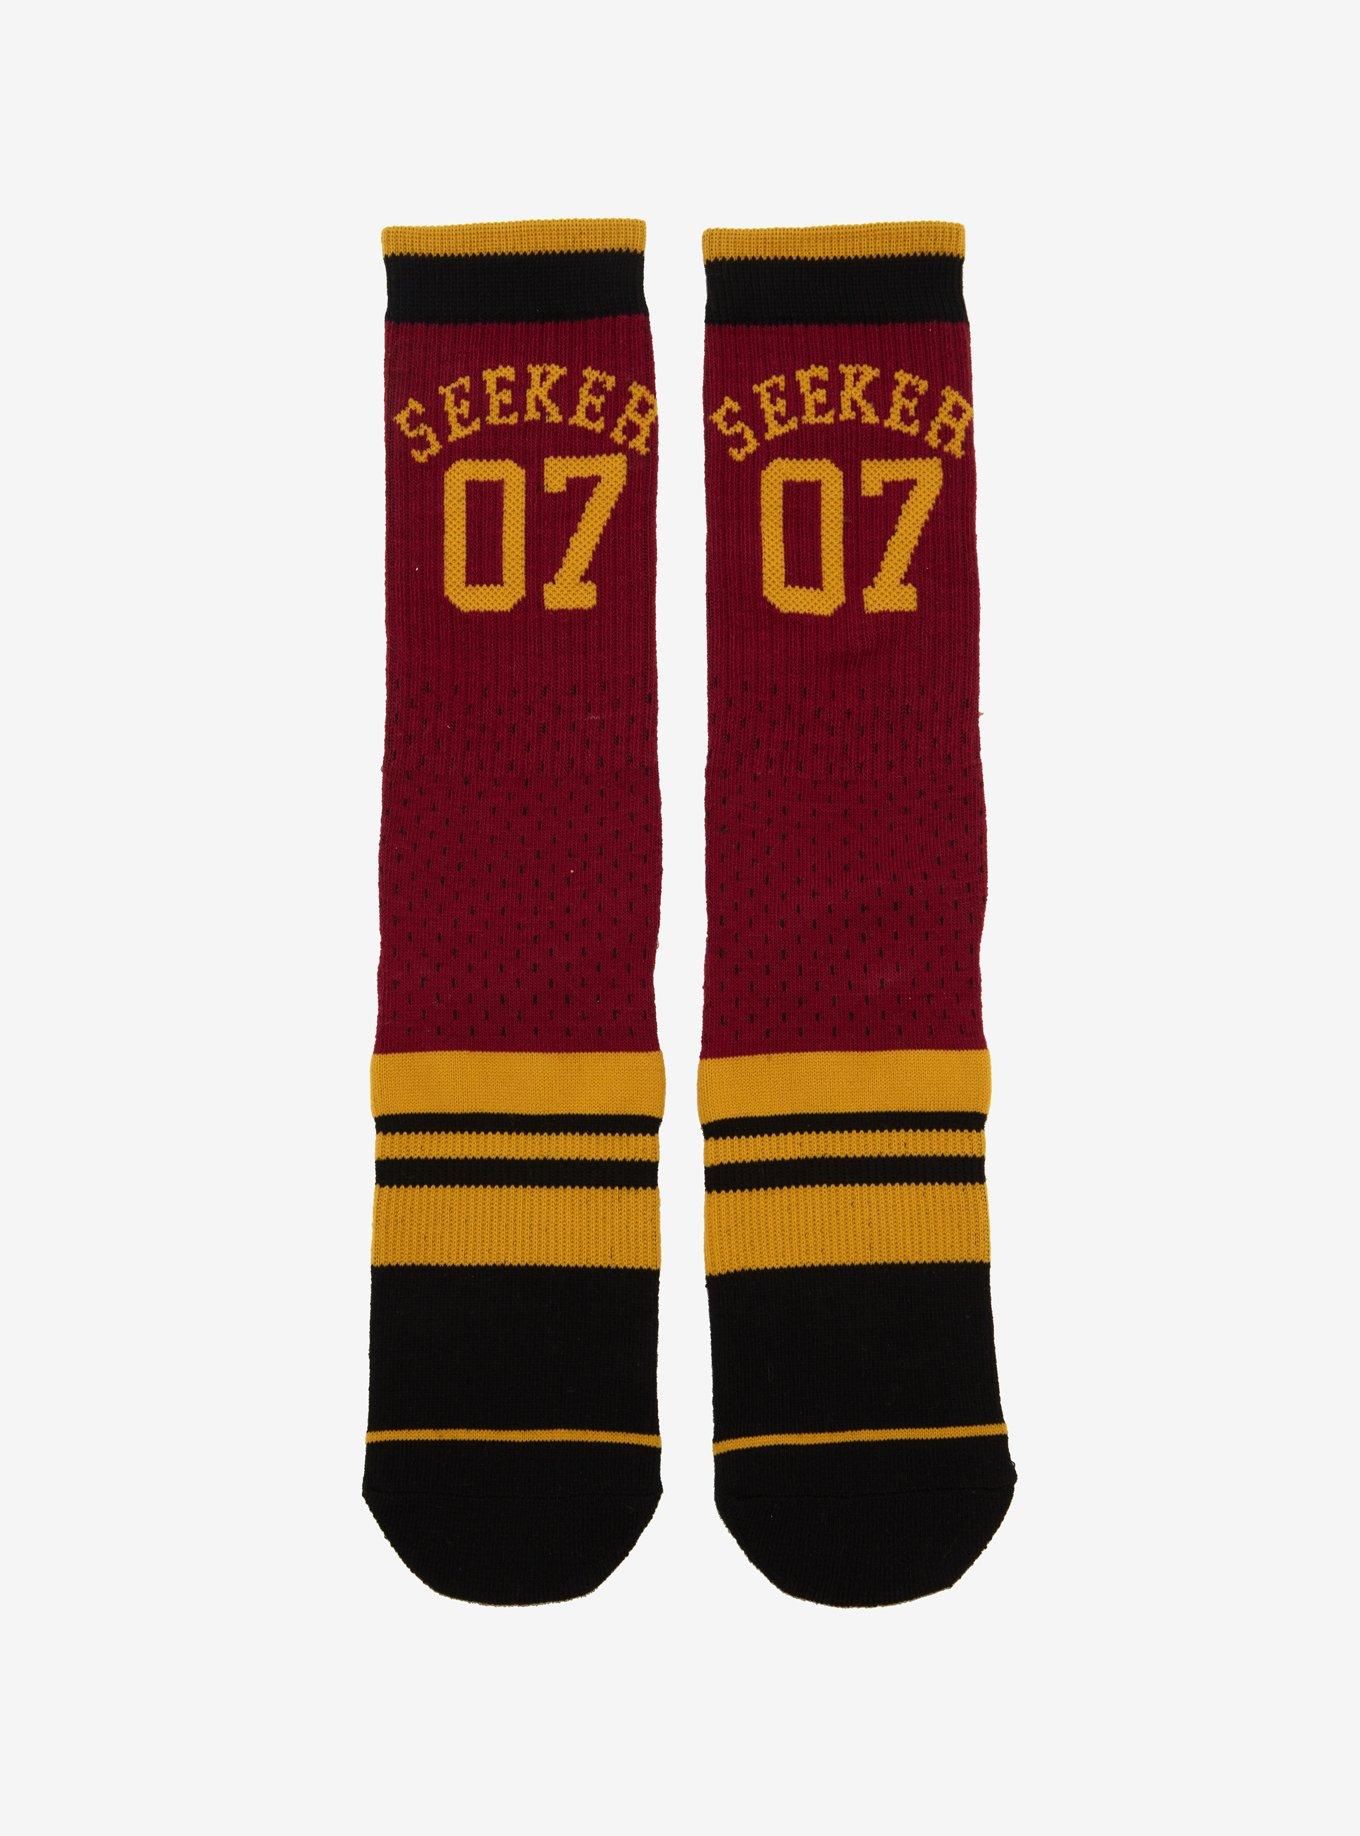 Harry Potter Seeker 07 Crew Socks, , alternate